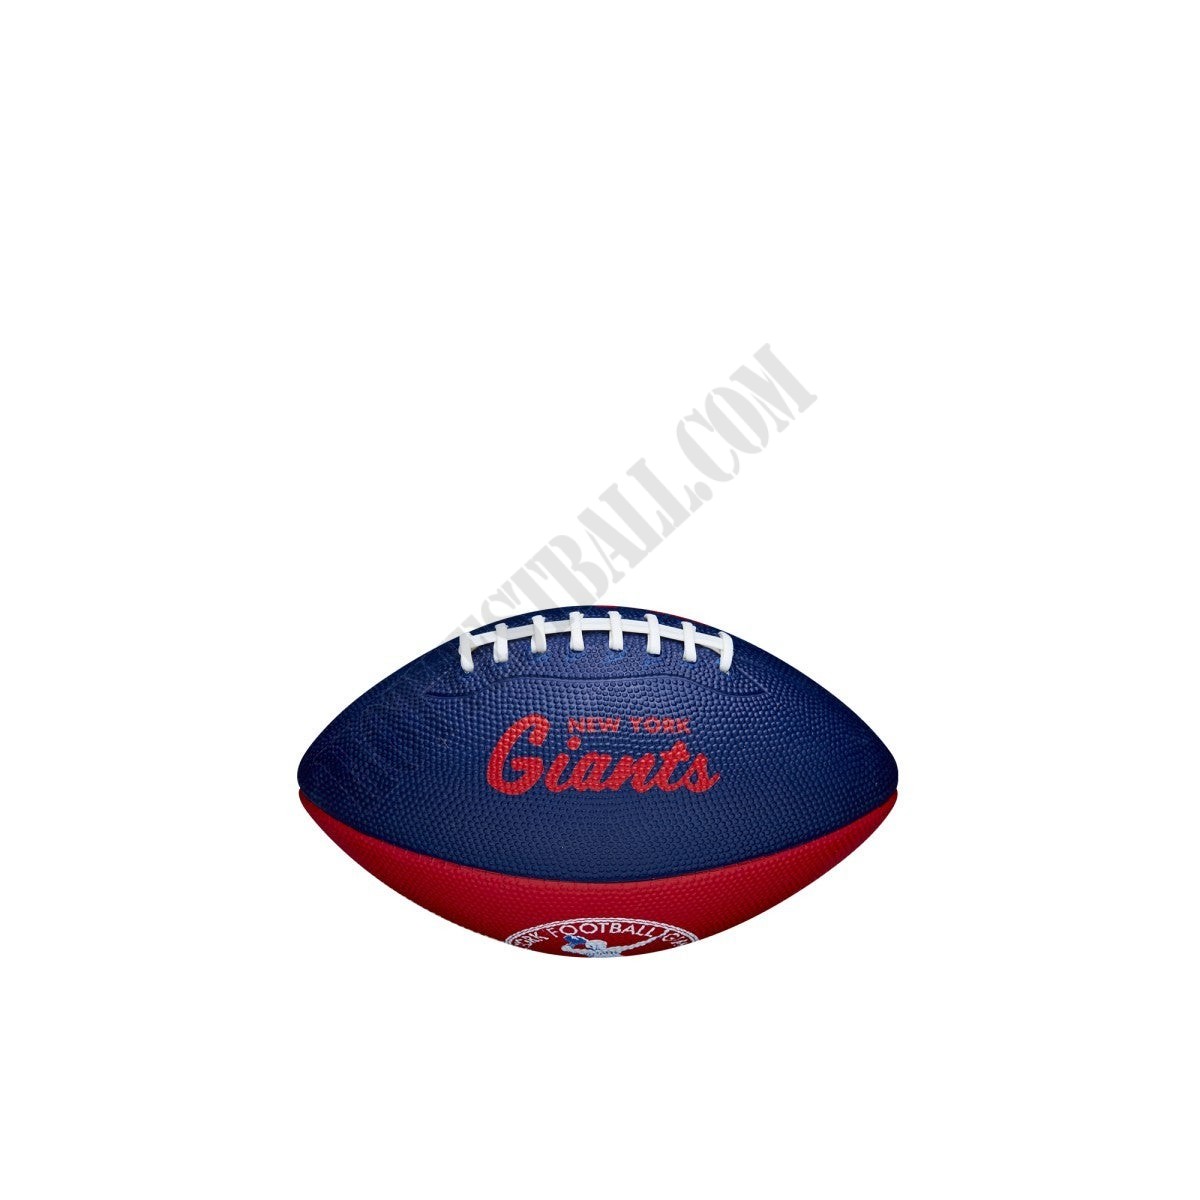 NFL Retro Mini Football - New York Giants ● Wilson Promotions - NFL Retro Mini Football - New York Giants ● Wilson Promotions